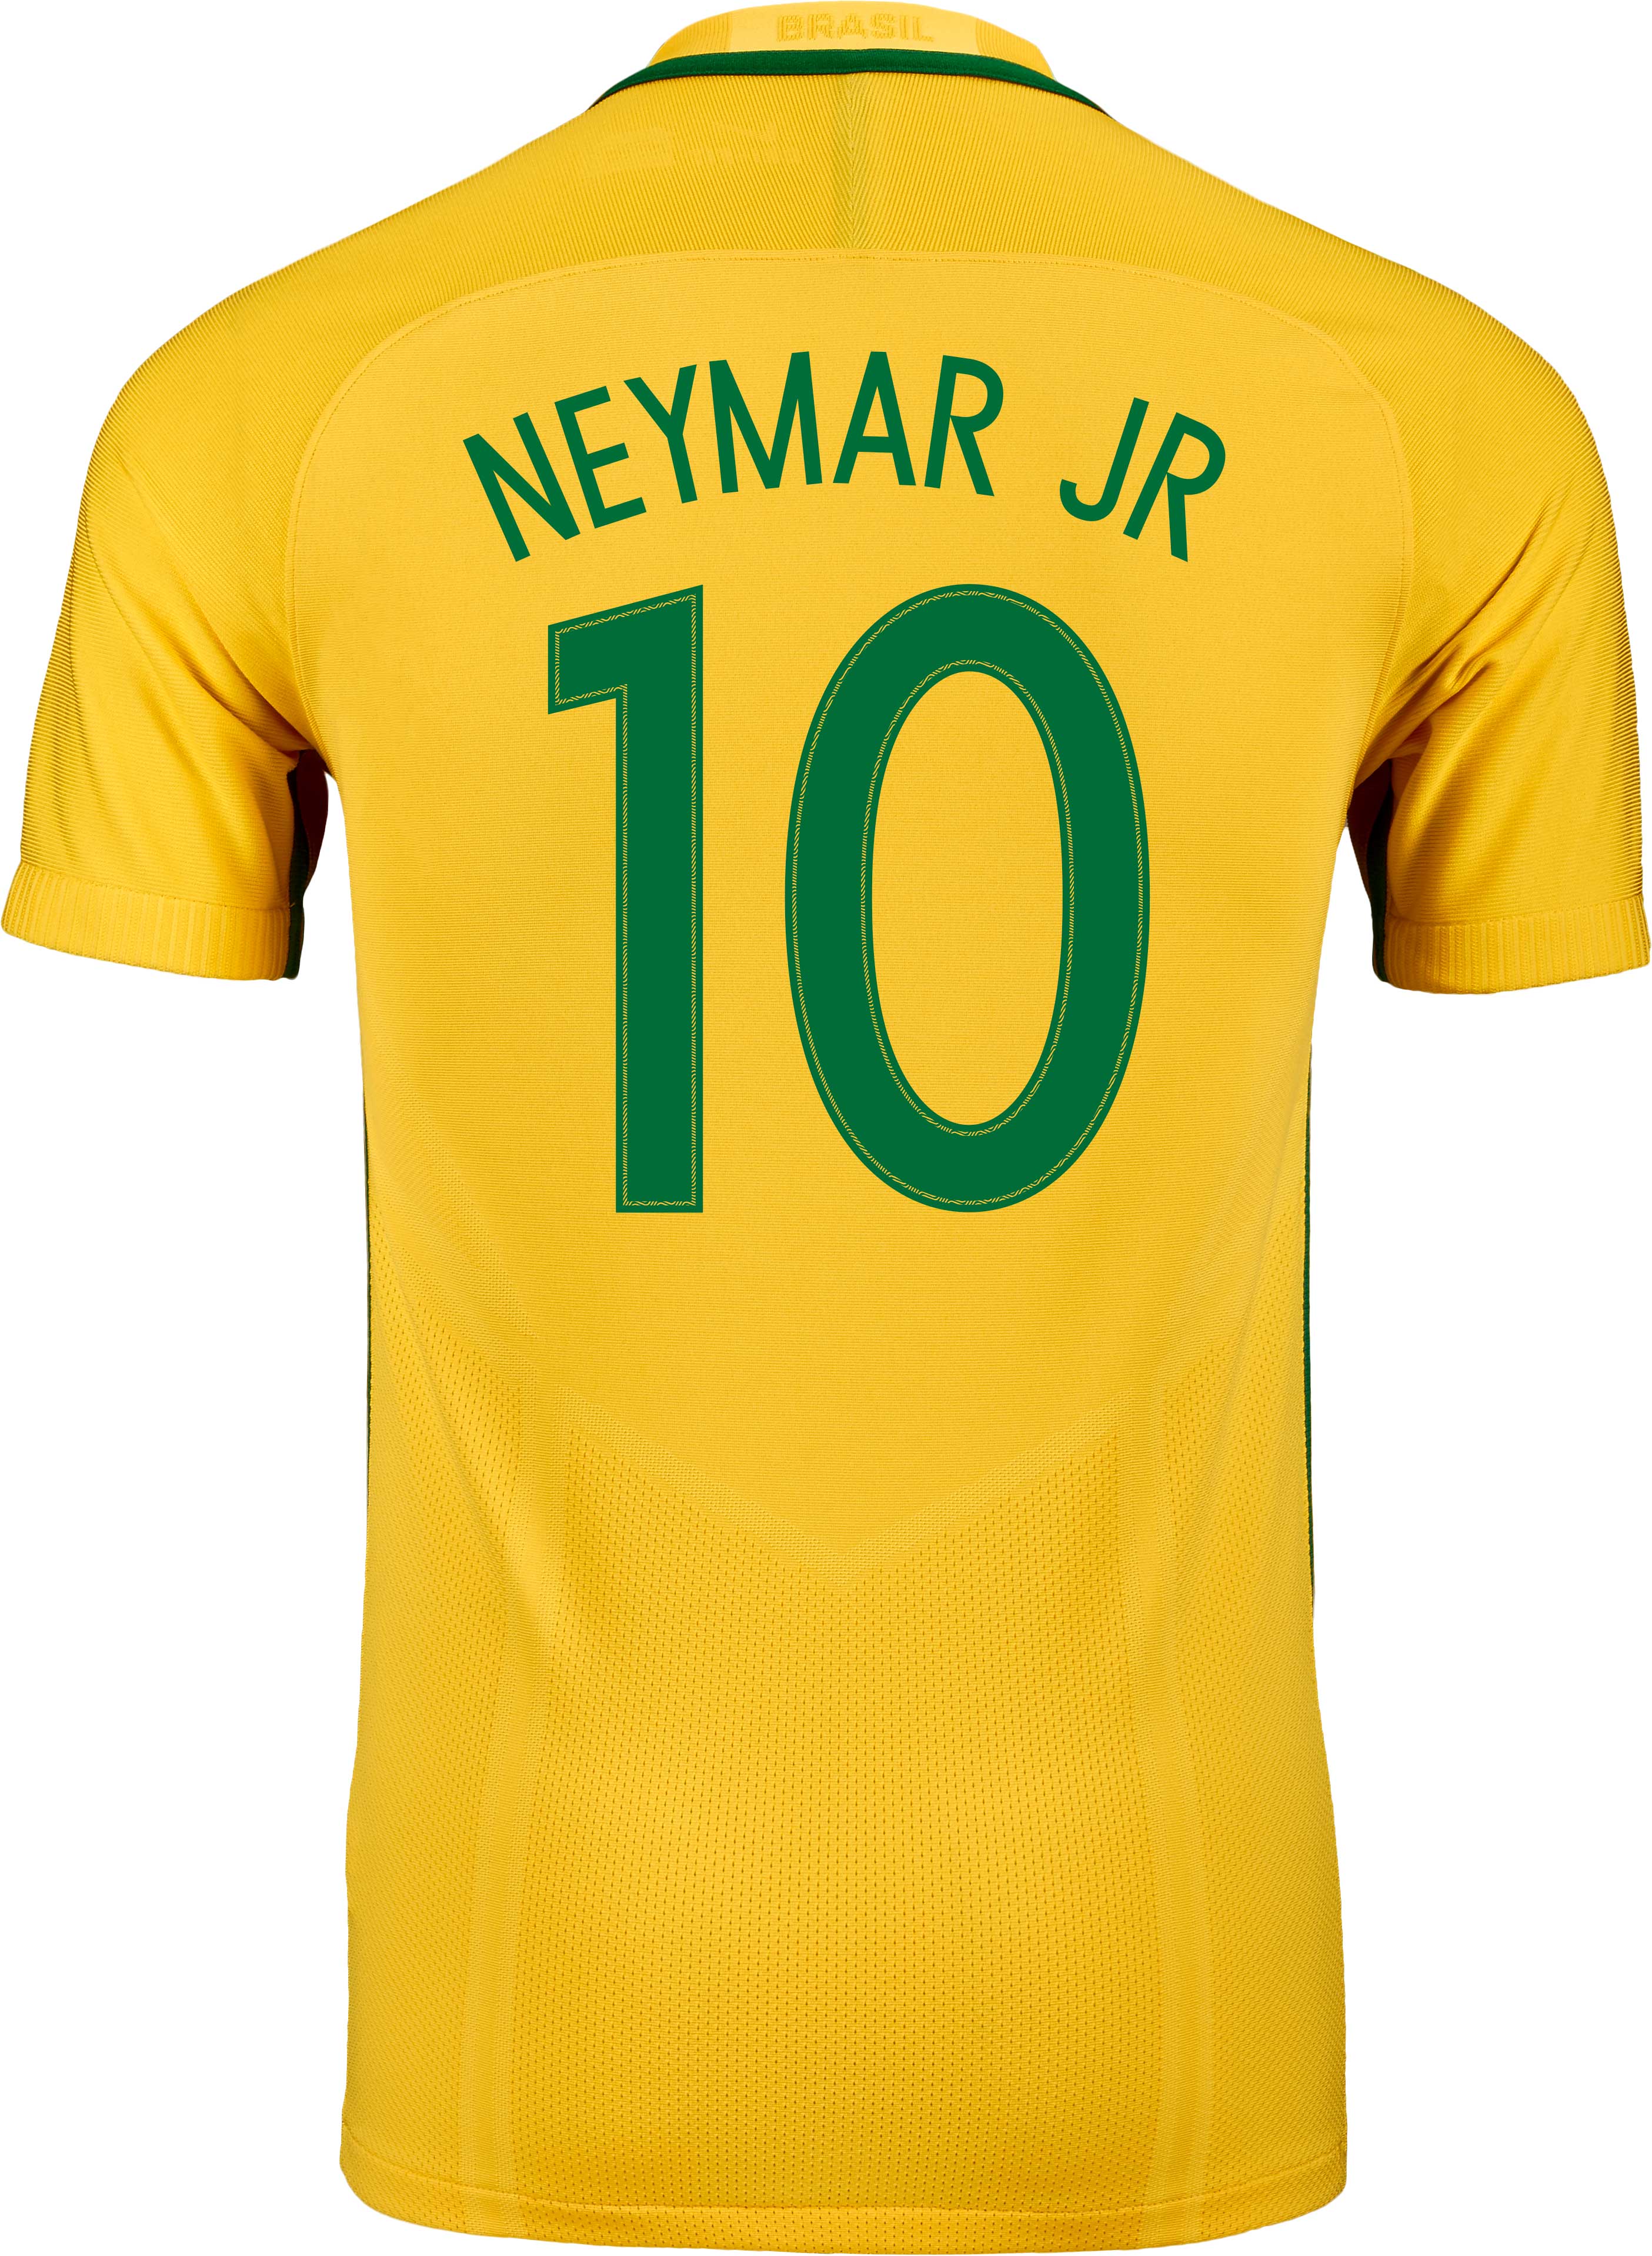 Nike Neymar Jr. Brazil Jersey - 2016 Brazil Jerseys